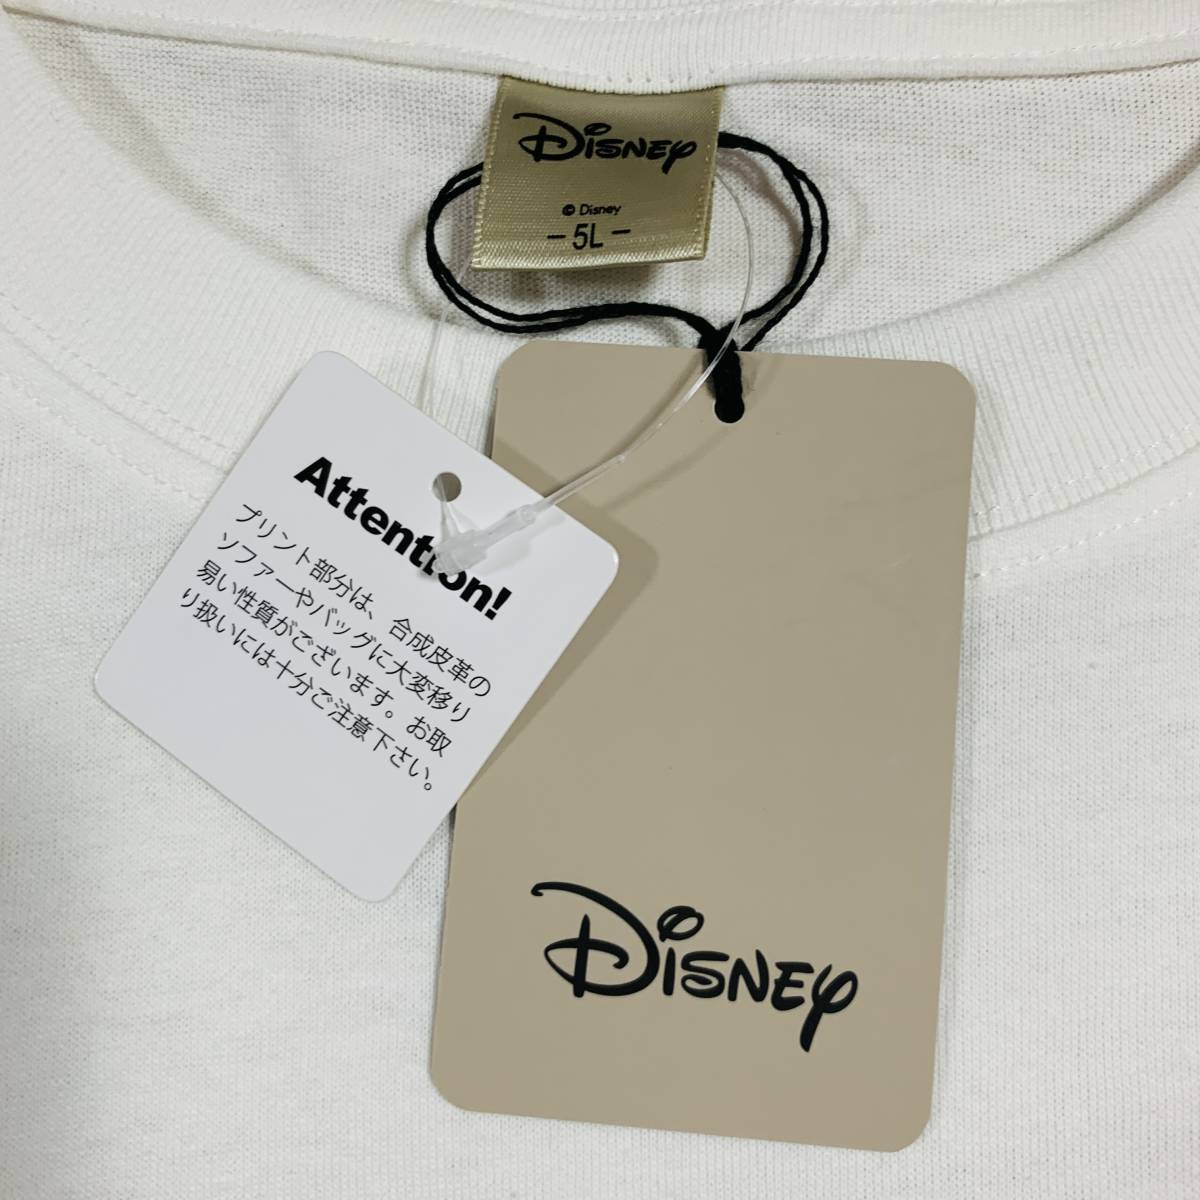 Diesny Mickey Mouse - MEN Tシャツ 5L 大きめのサイズ カットソー クルーネック Tシャツ 白色 リュックサック (タグ付き新品未着用品)_画像8